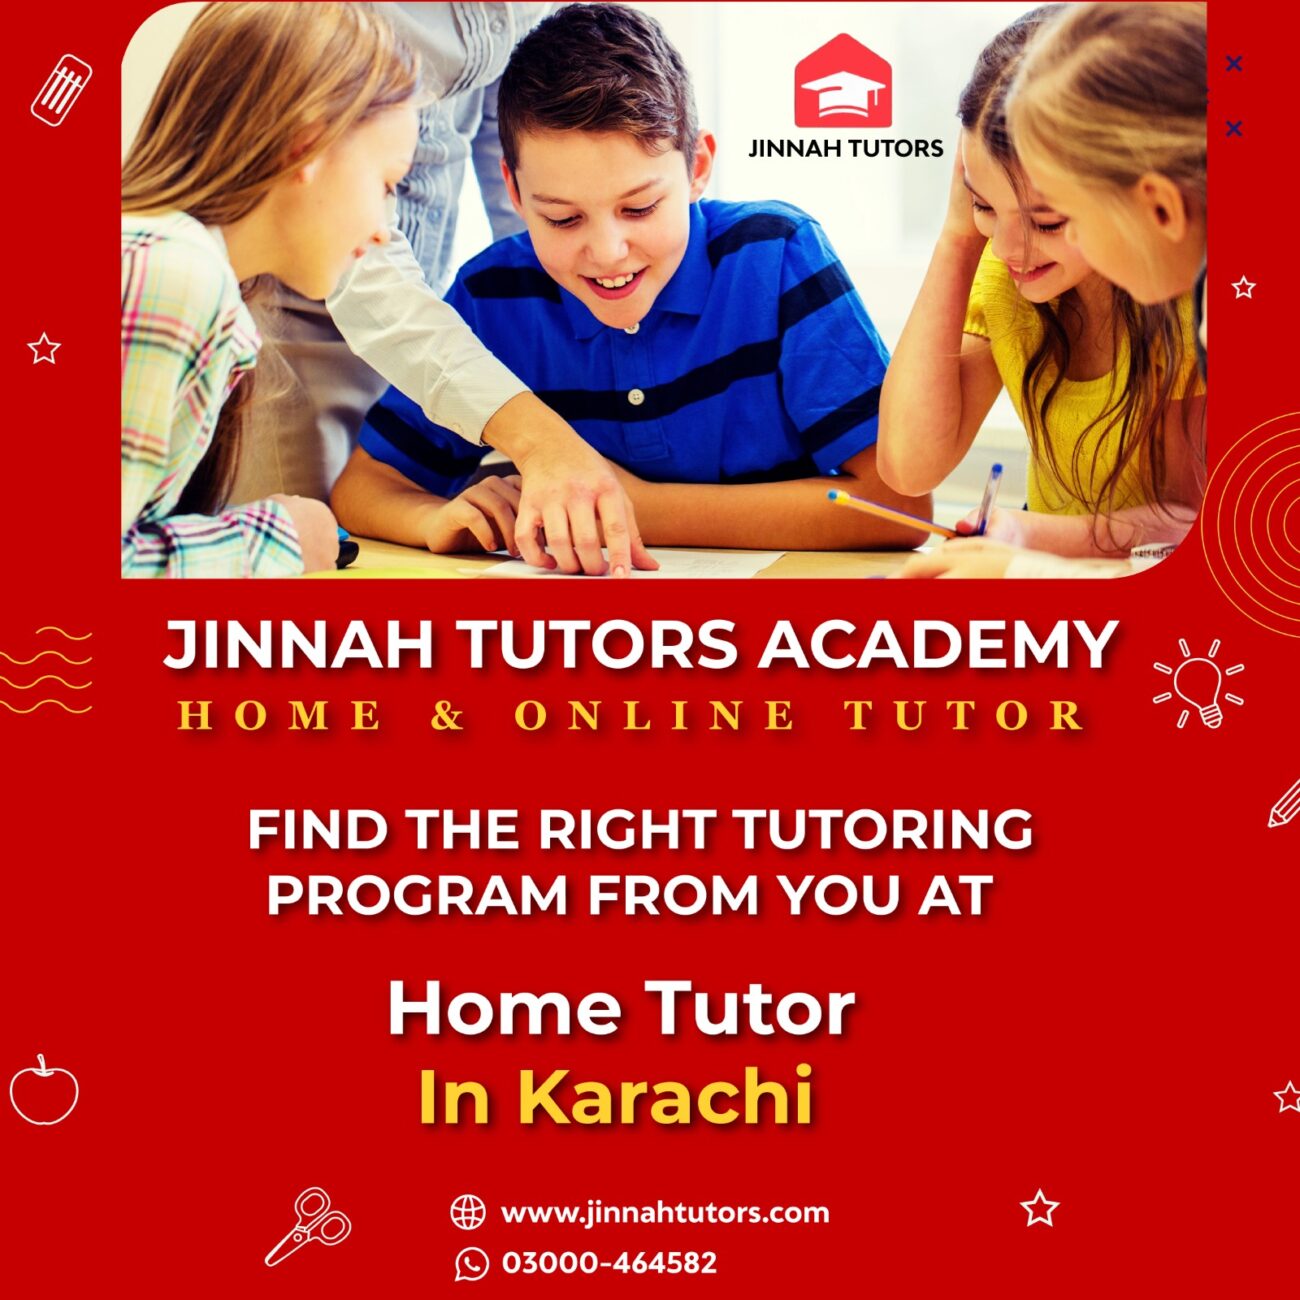 Jinnah Tutor Academy: The Premier Tutor Academy in Karachi